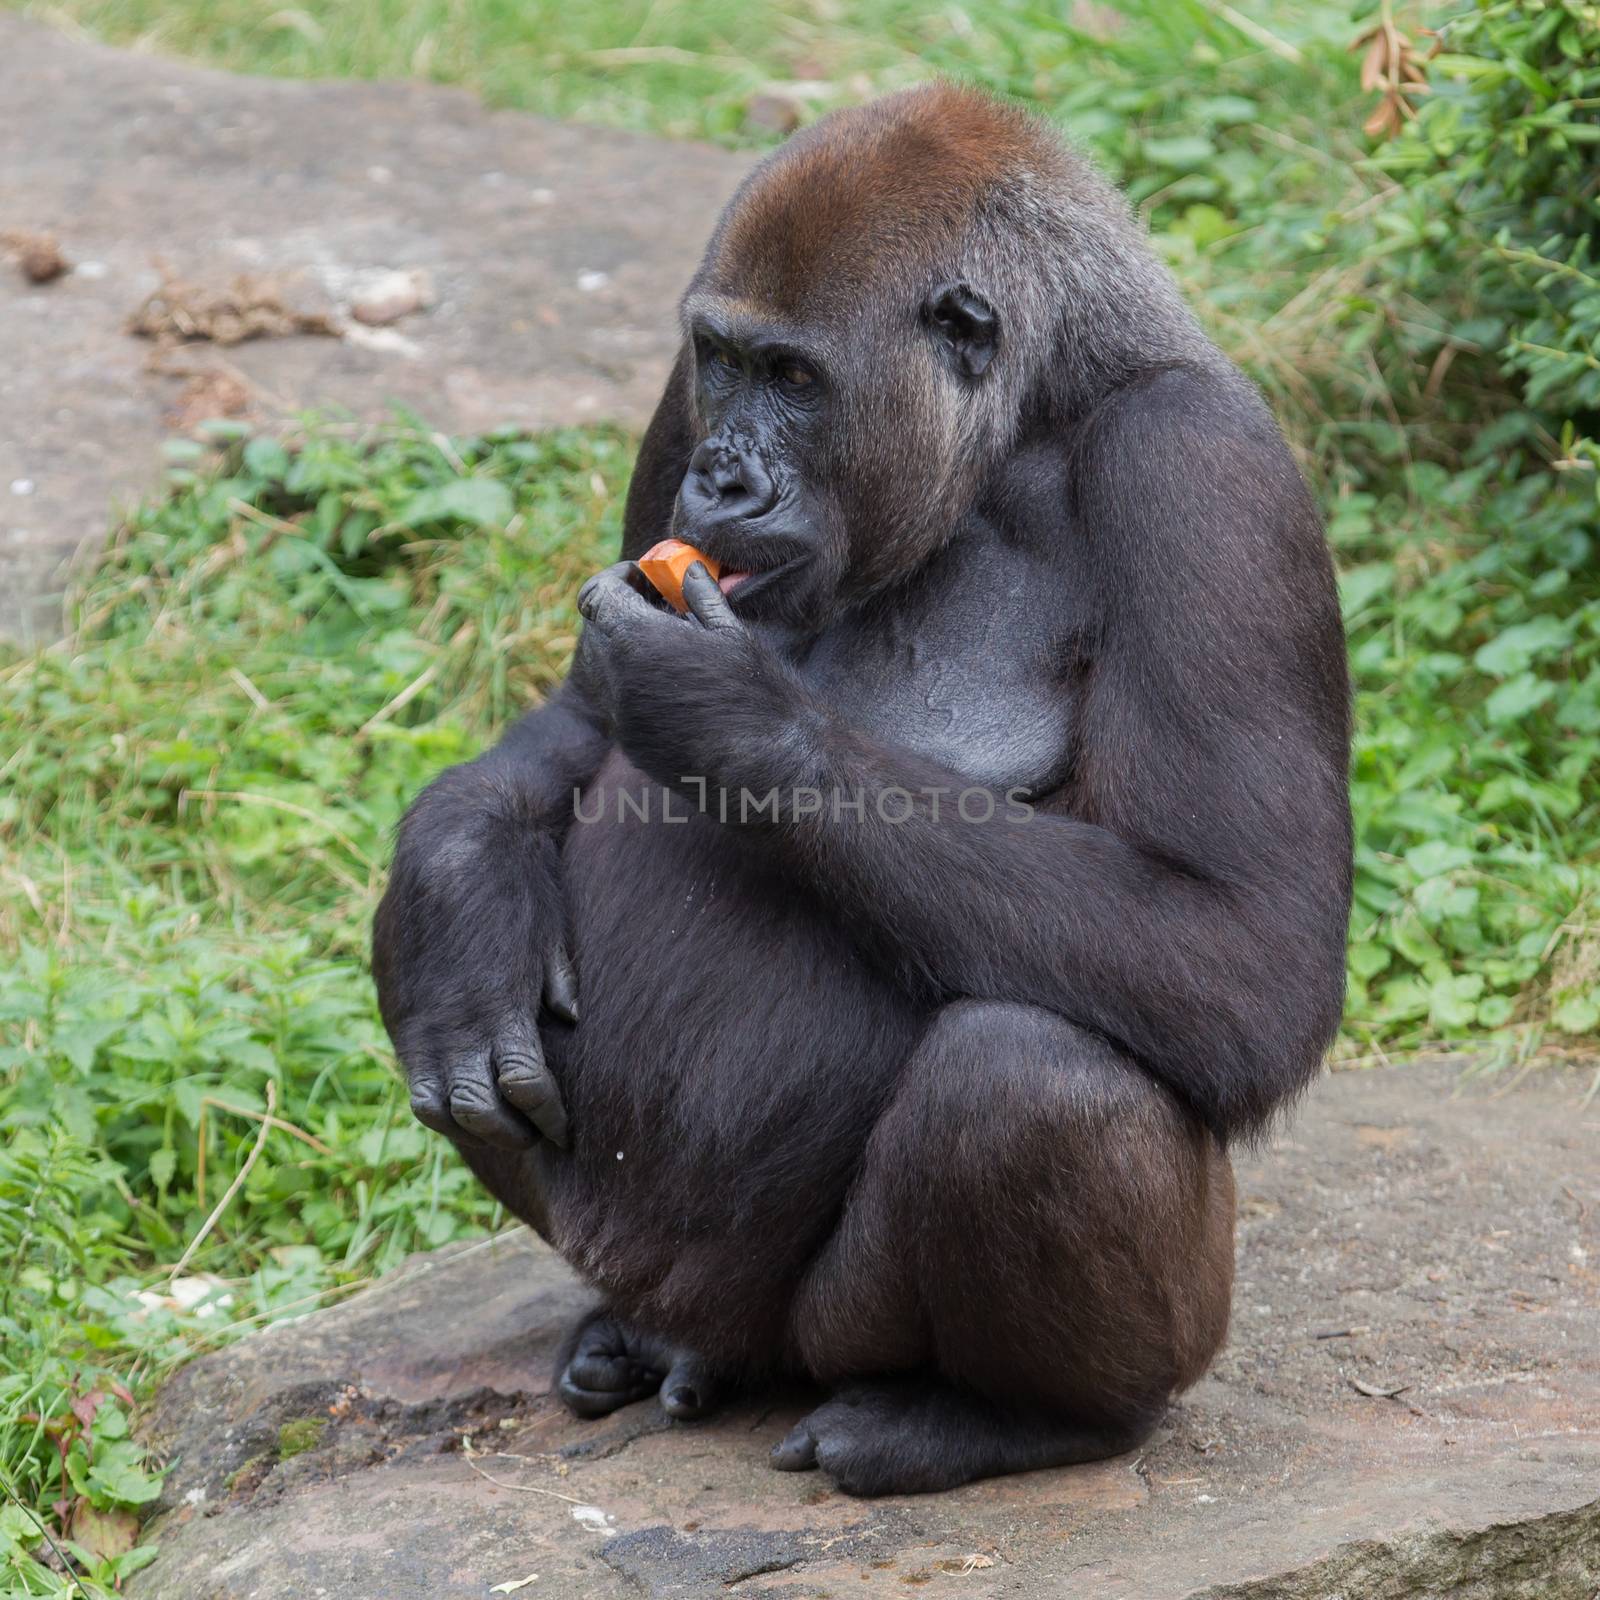 Adult gorilla eating by michaklootwijk